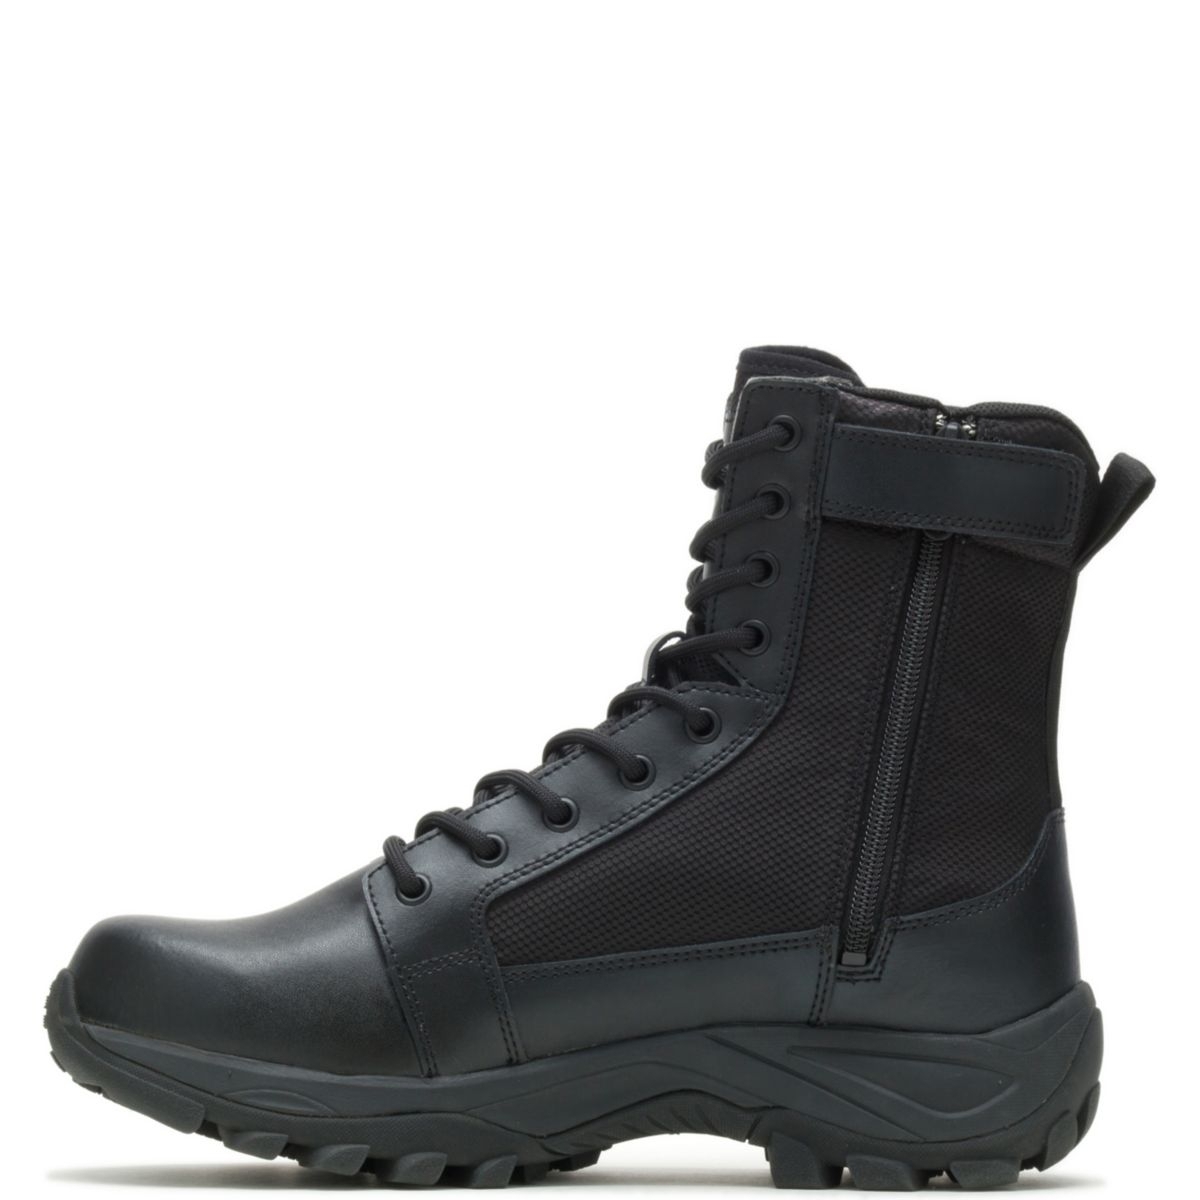 Bates Men's Fuse 8-inch Side Zip Waterproof Boot Black - E06508 BLACK - BLACK, 10